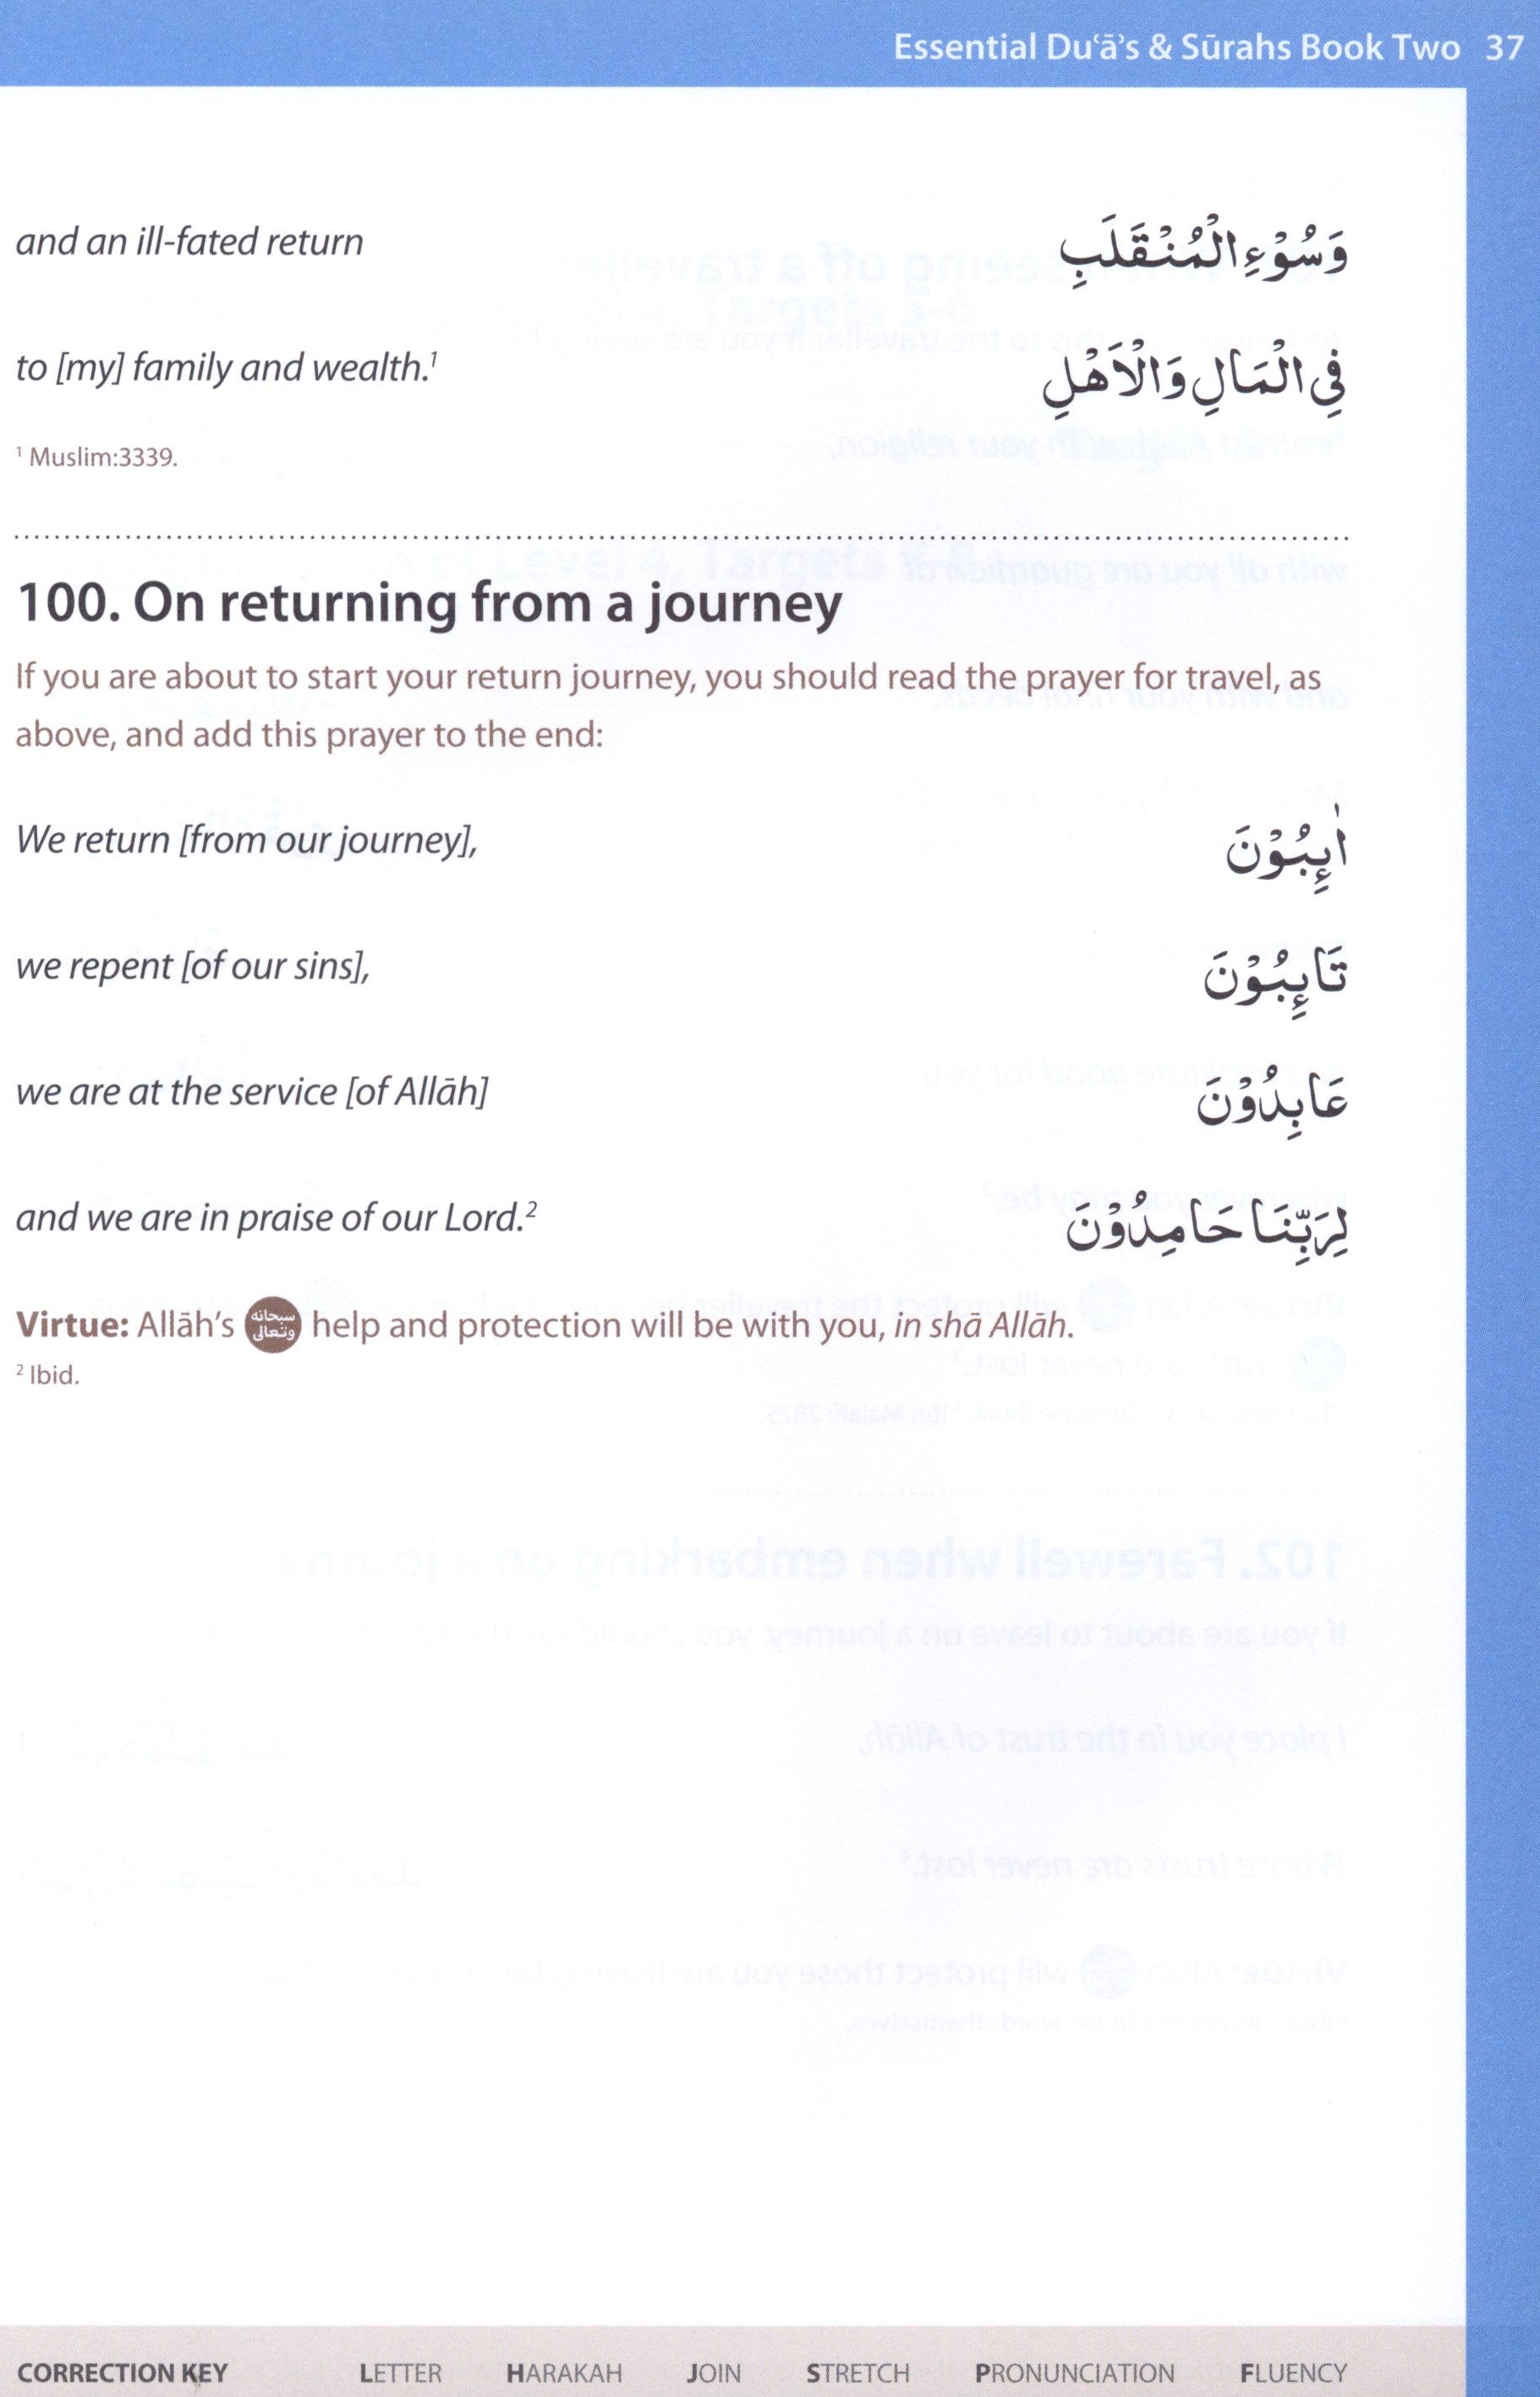 Essential Duas and Surahs Book 2 (Urdu Script)